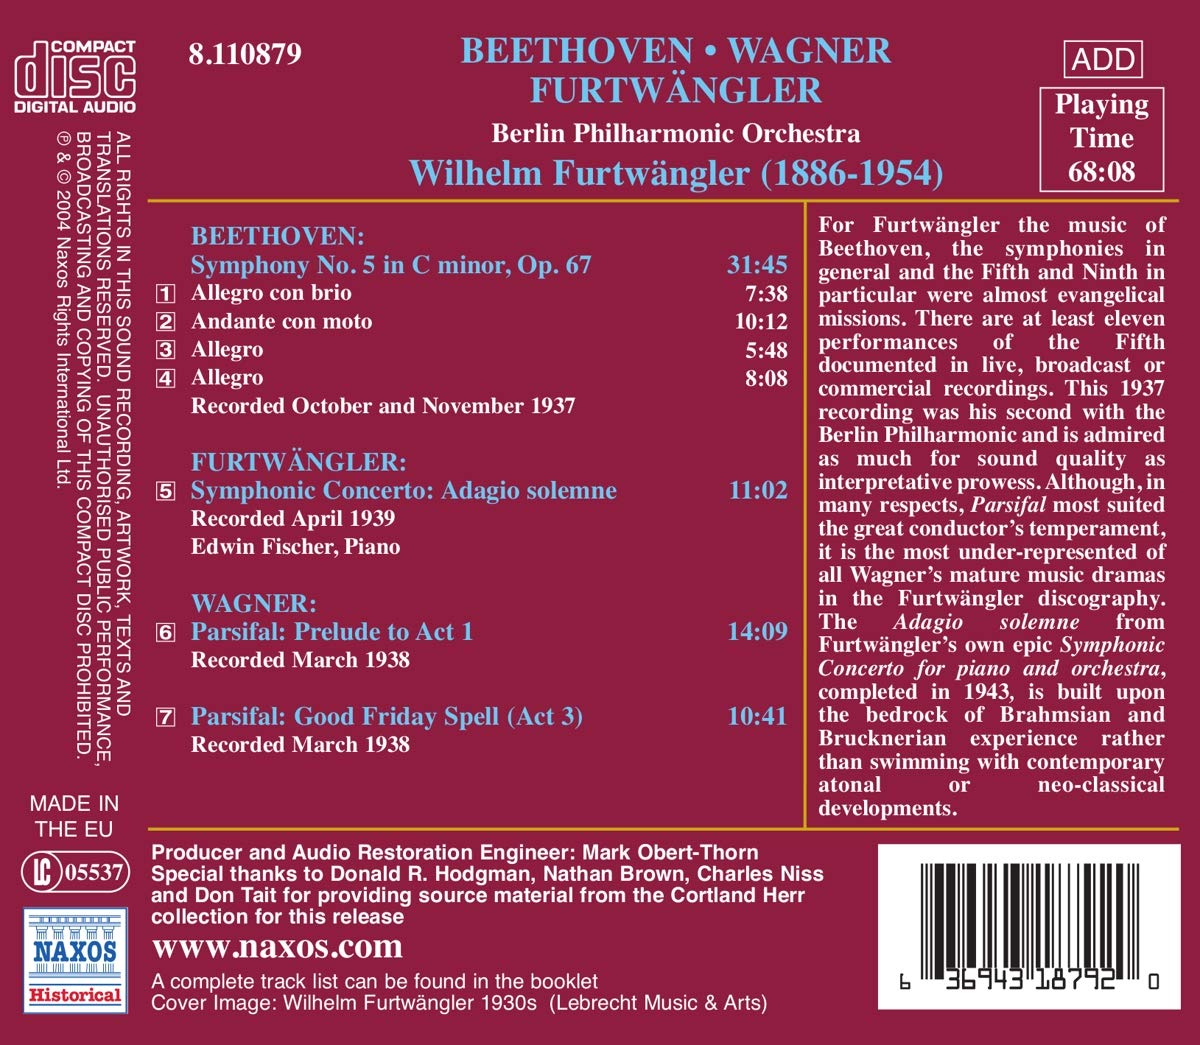 Edwin Fischer 윌리엄 푸르트뱅글러가 지휘하는 베를린 필하모닉 오케스트라 (Great Conductors - Wilhelm Furtwangler) 